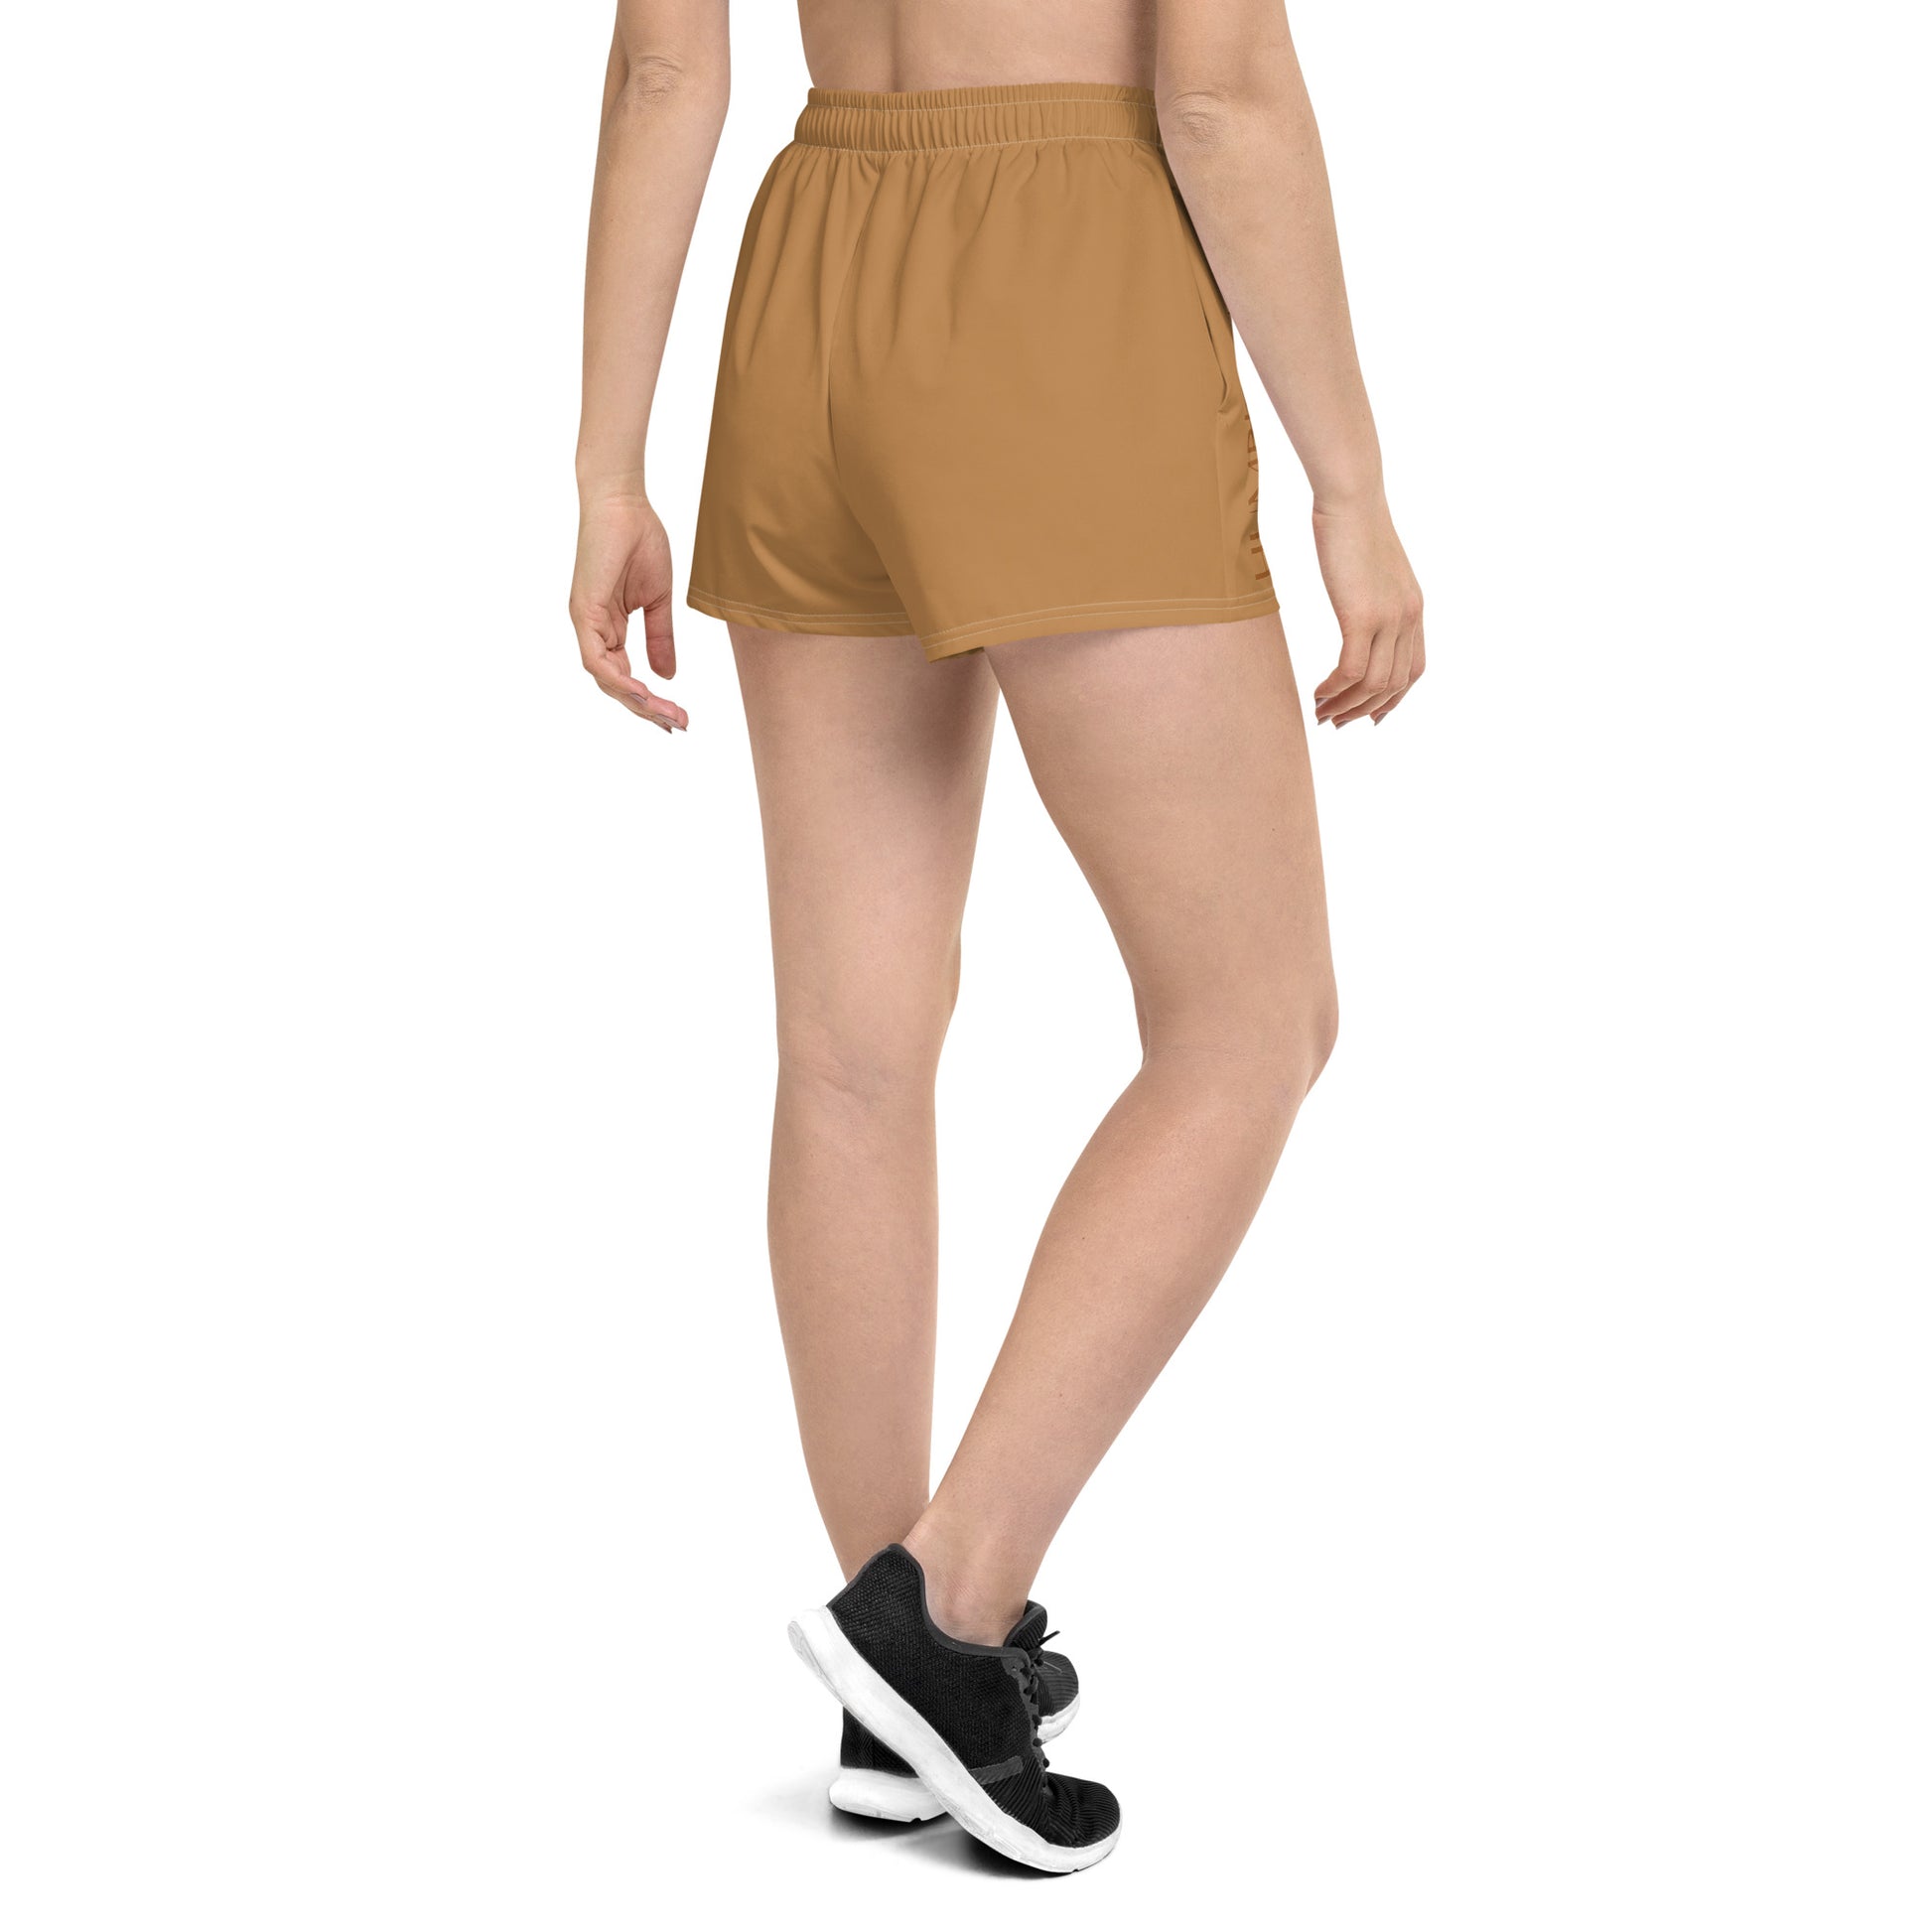 Humble Sportswear, women’s color match shorts, women’s running shorts, women’s shorts 